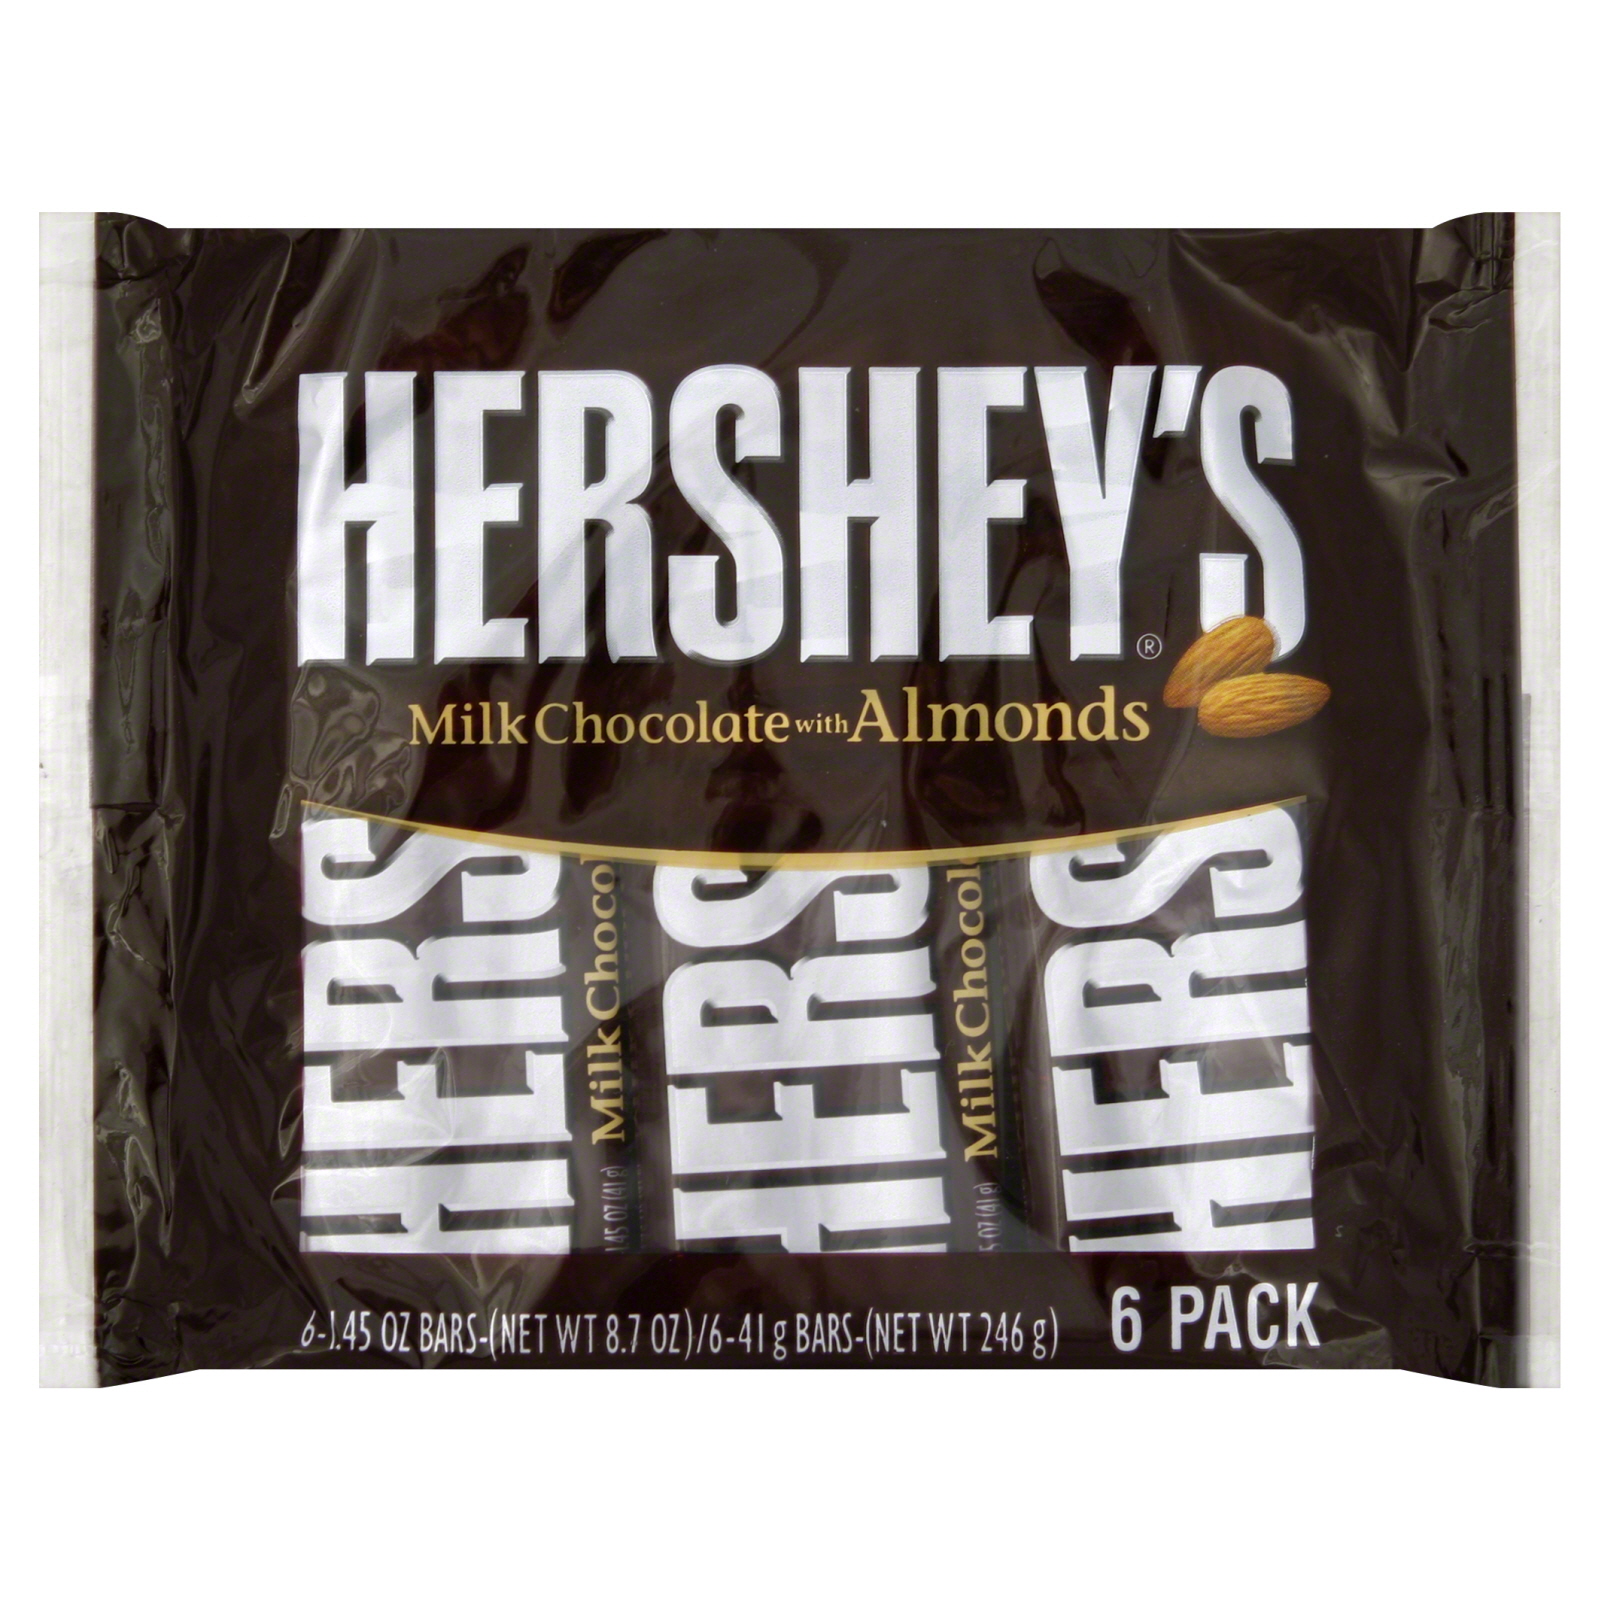 Hershey's Milk Chocolate Bars with Almonds, 6 - 1.45 oz (41 g) bars [8.7 oz (246 g)]